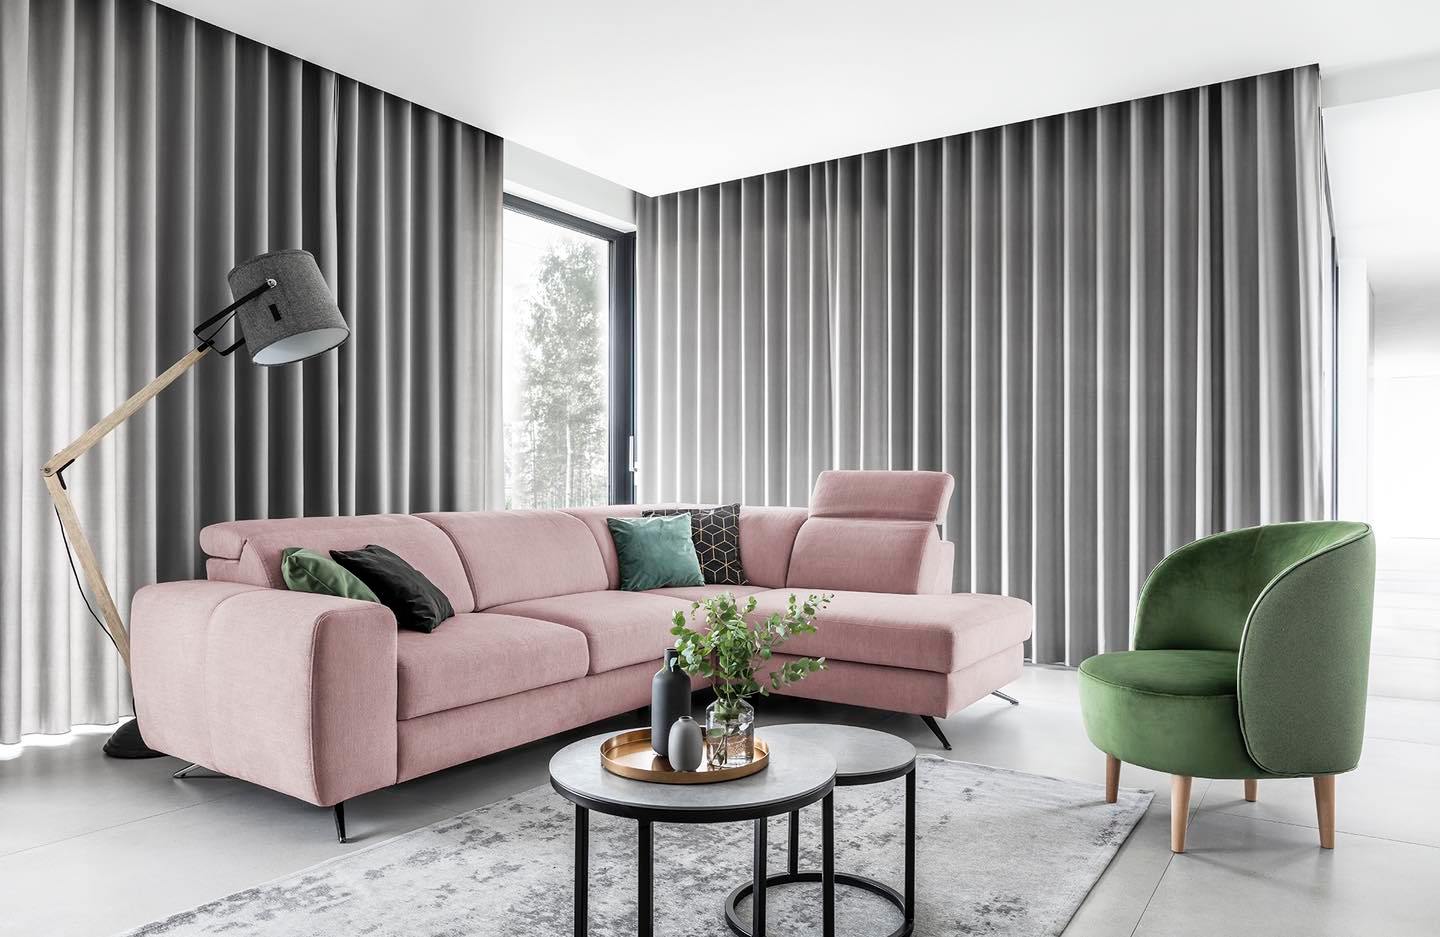 Add a Pop of Colour: Vibrant Sofa Options